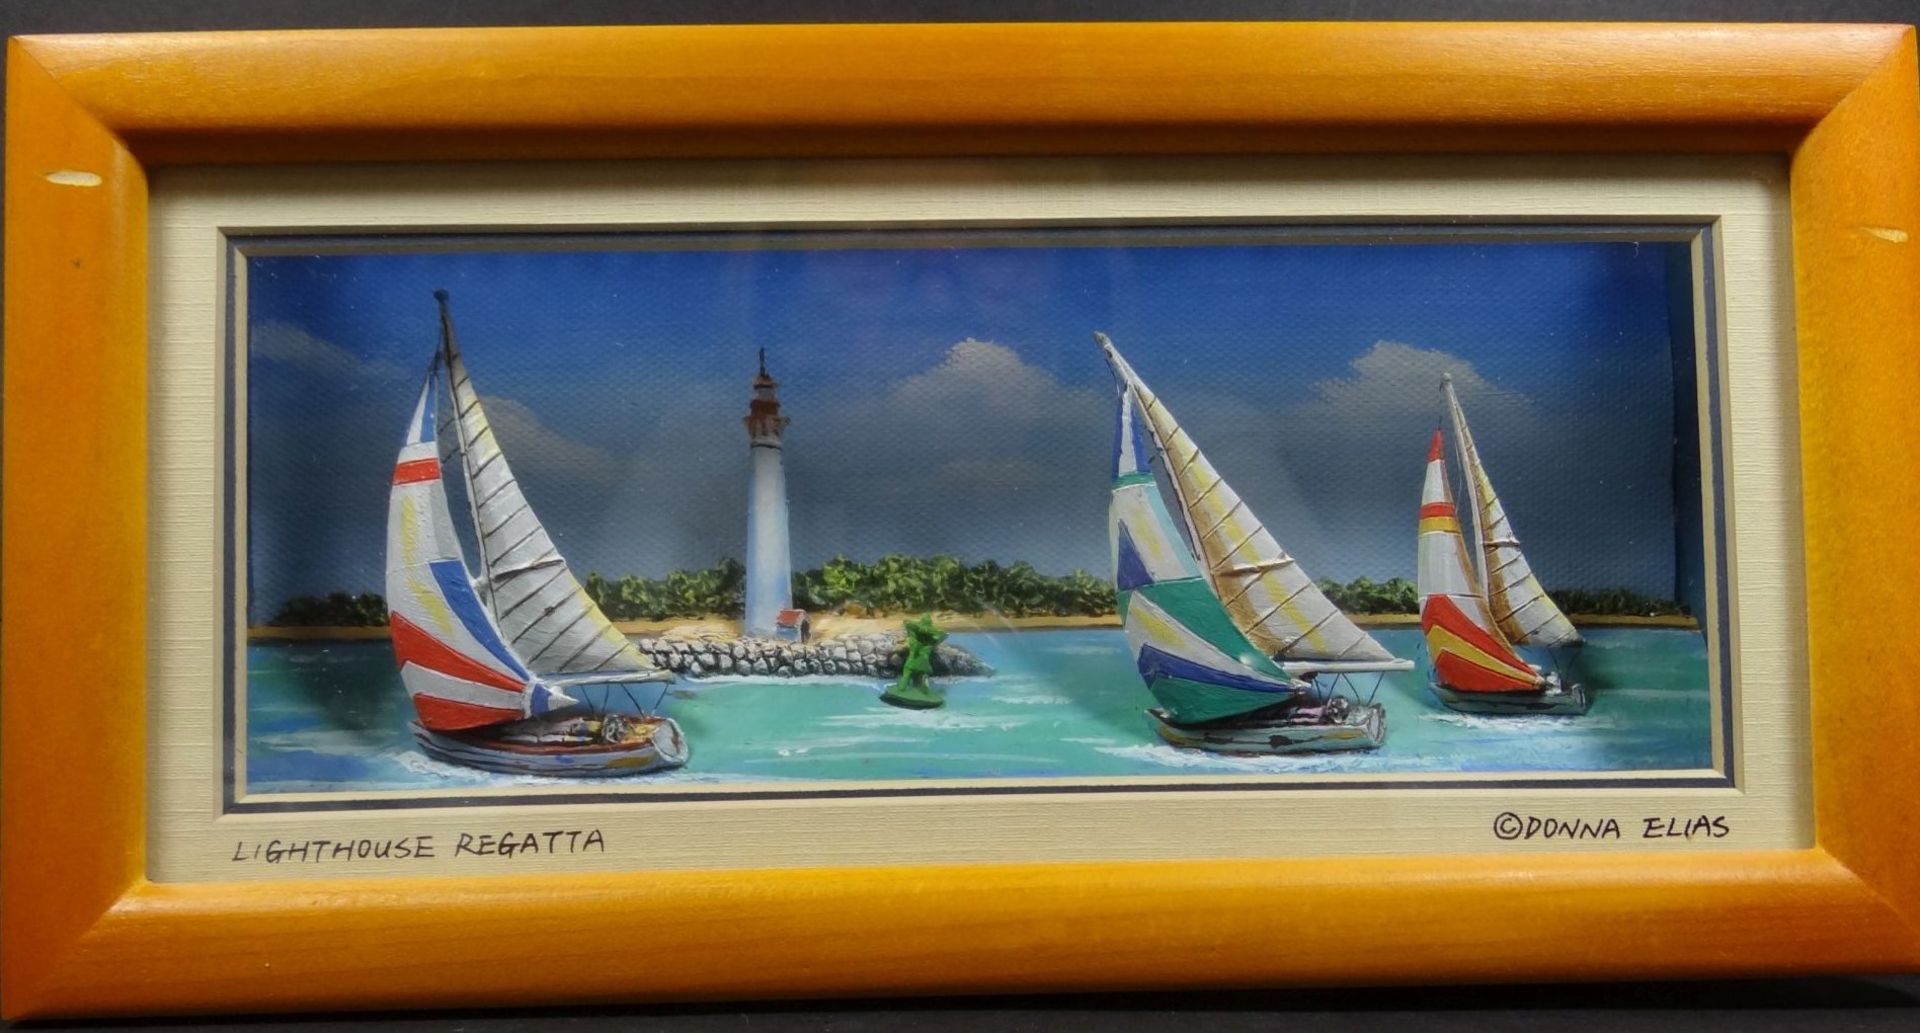 Donna Elias "Lighthouse Regatta" Diorama, als Tosch-oder Wandbild, 11,5x23 cm"""" - Image 2 of 6